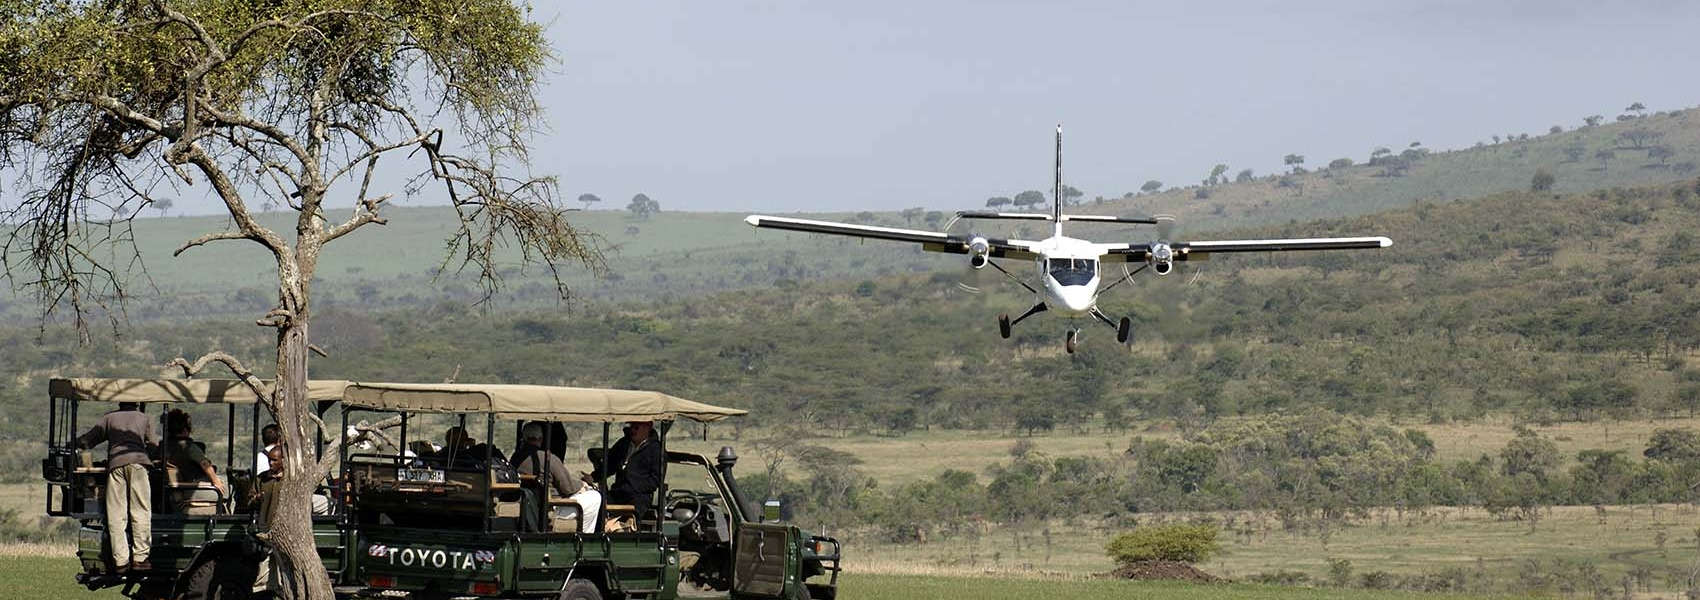 air safaris africa